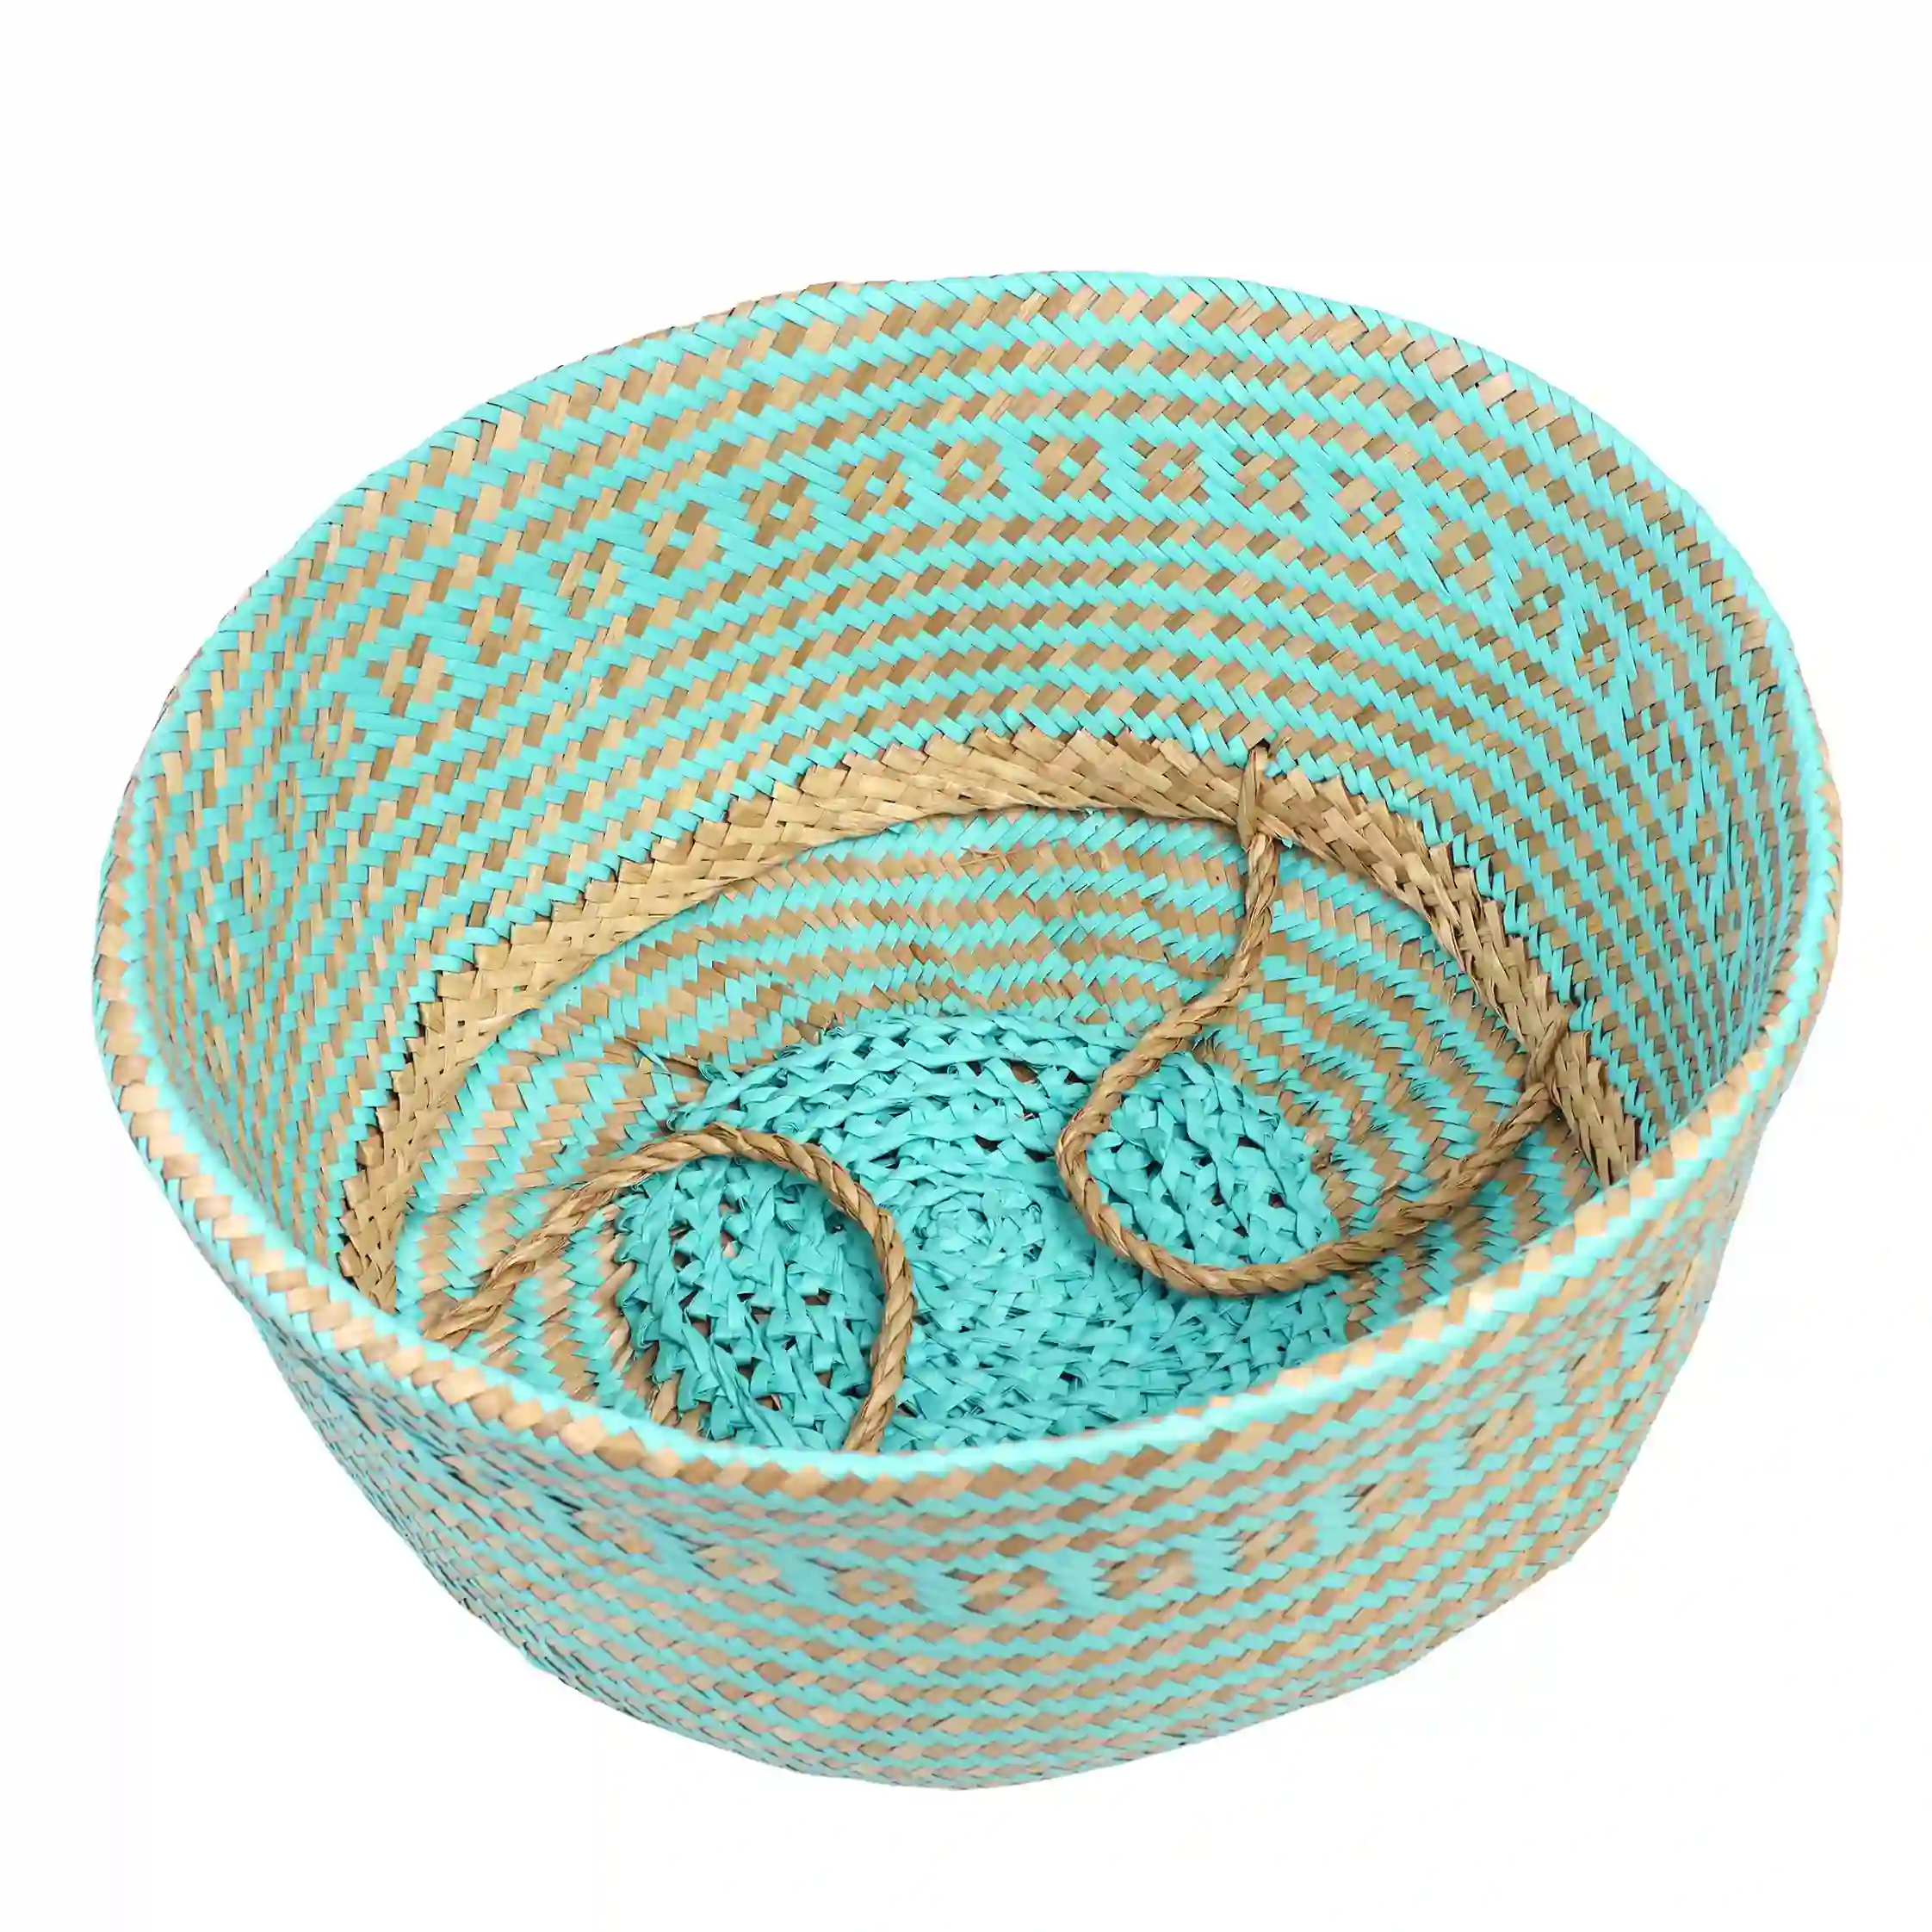 cesta grande almacenamiento de pradera marina turquesa